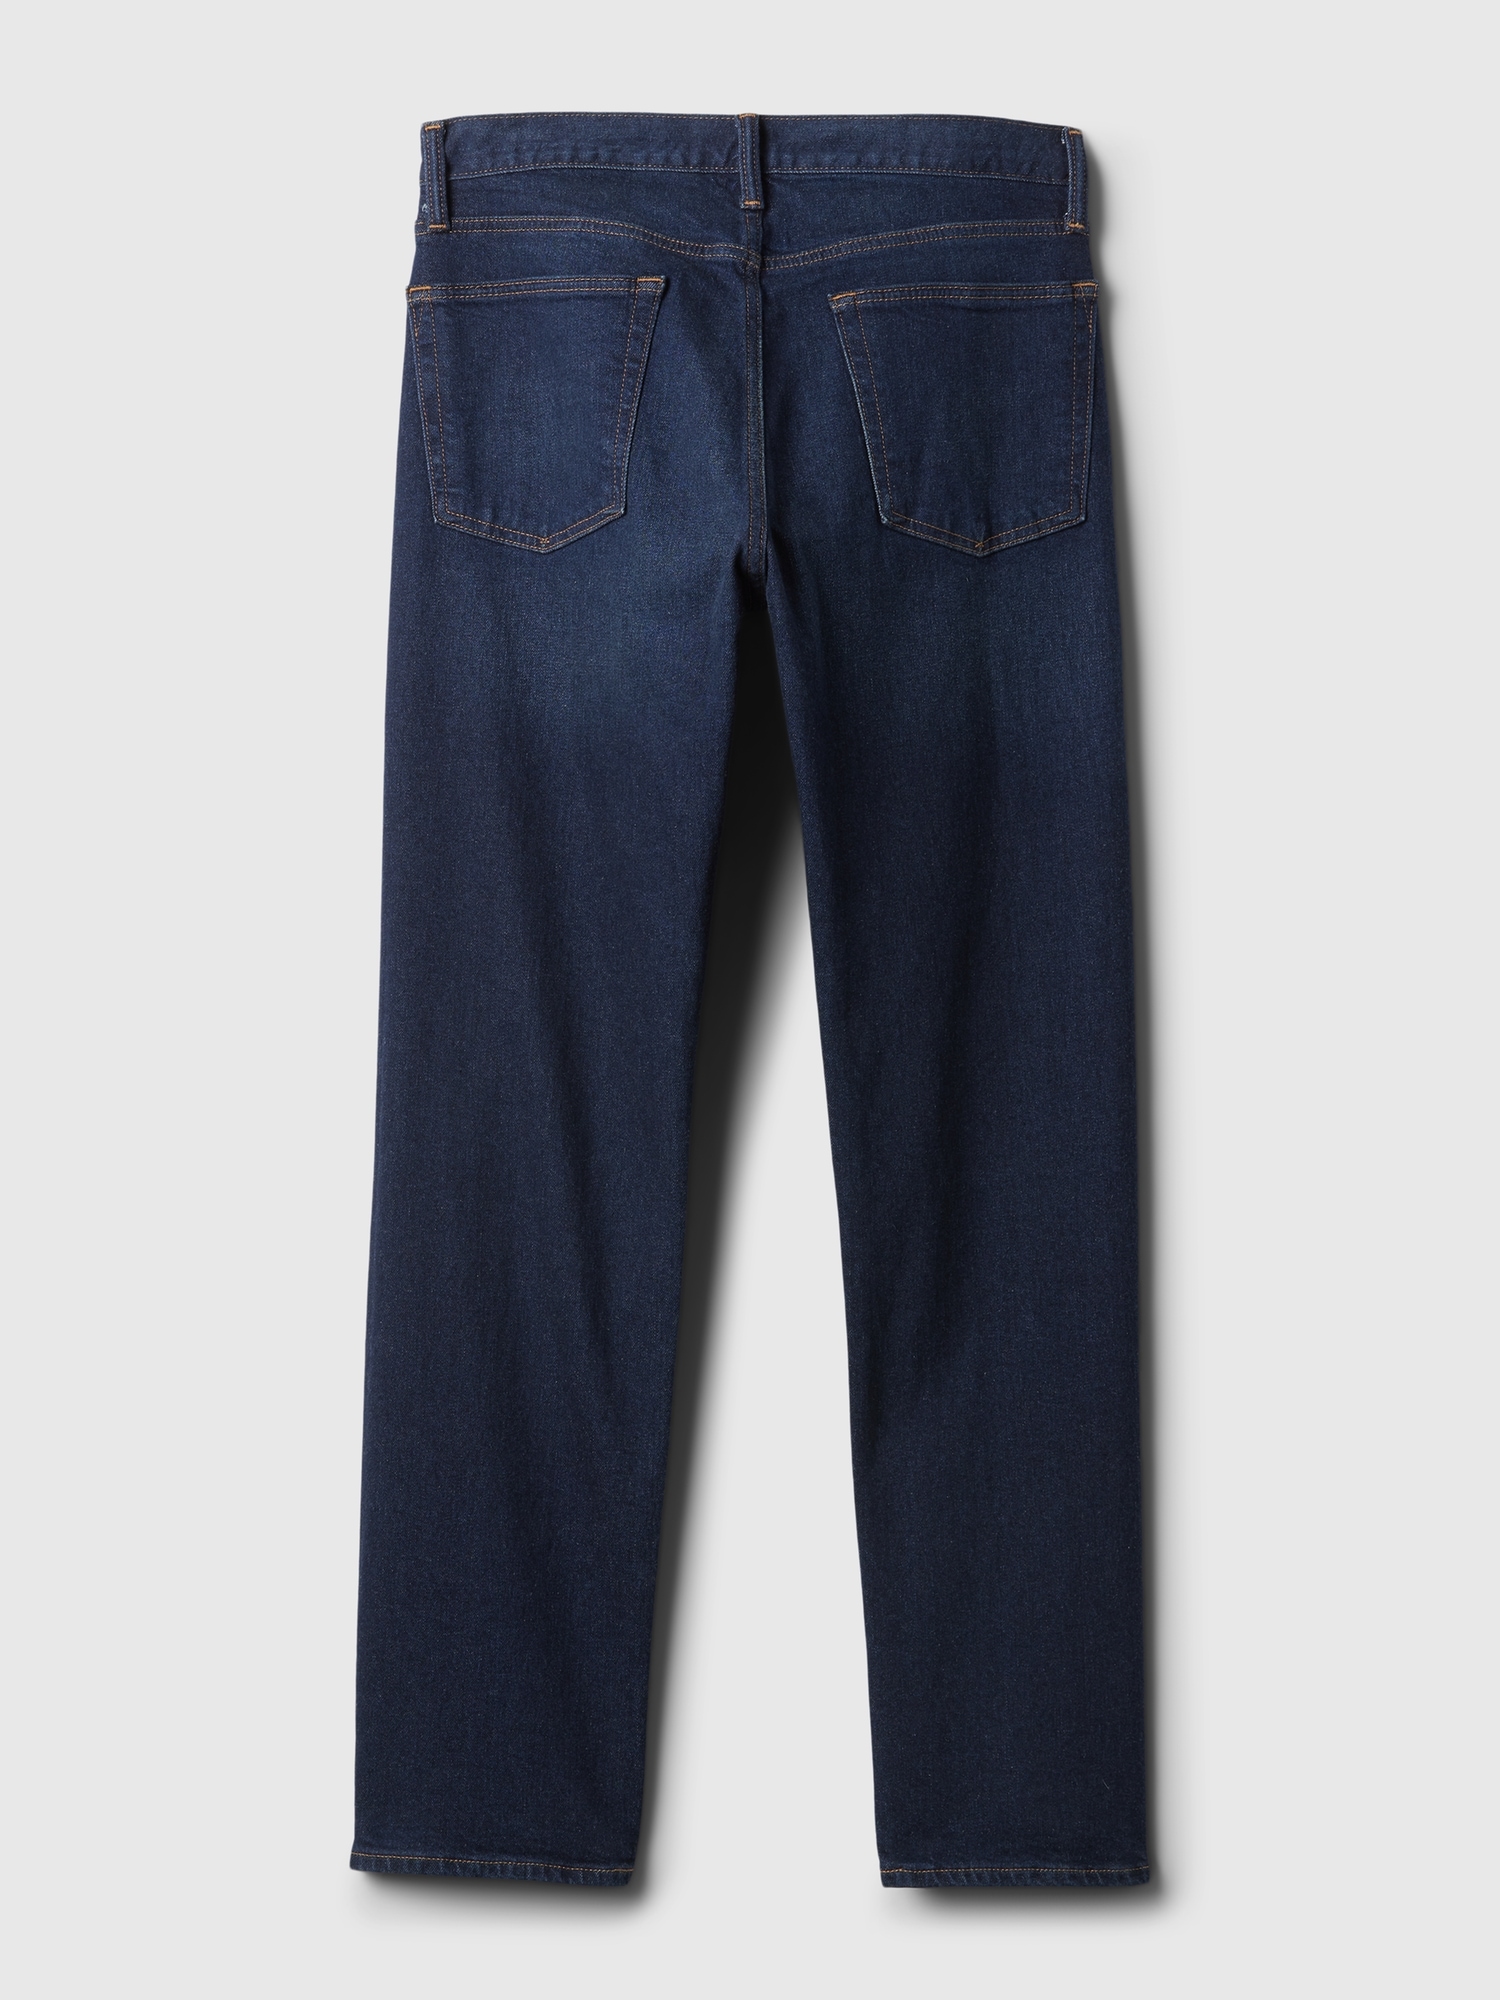 GAP Men's NEW Size 28/30 SOFT WEAR Straight Jeans with GapFlex